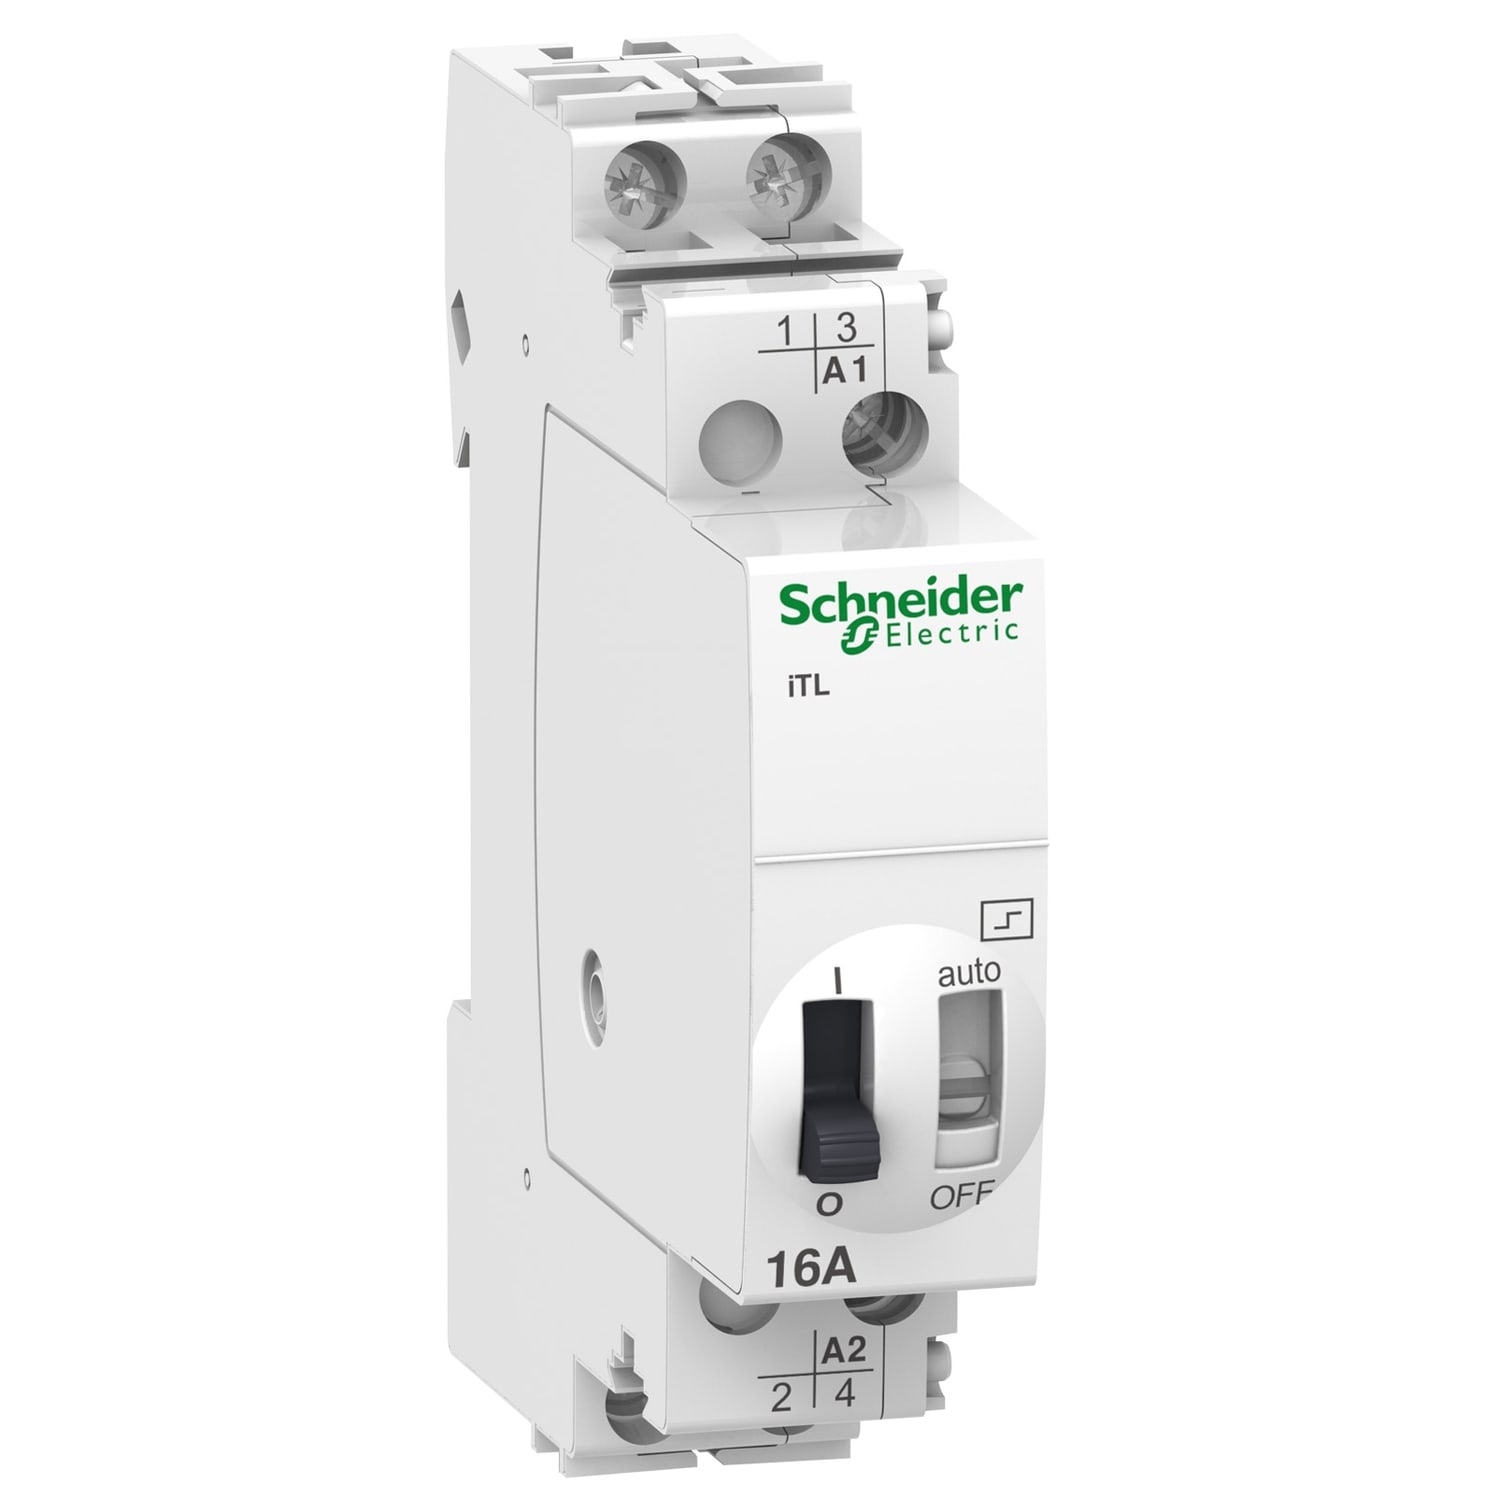 Schneider Electric - Acti9, iTL telerupteur 16A 2NO 24VCA 12VCC 50-60Hz